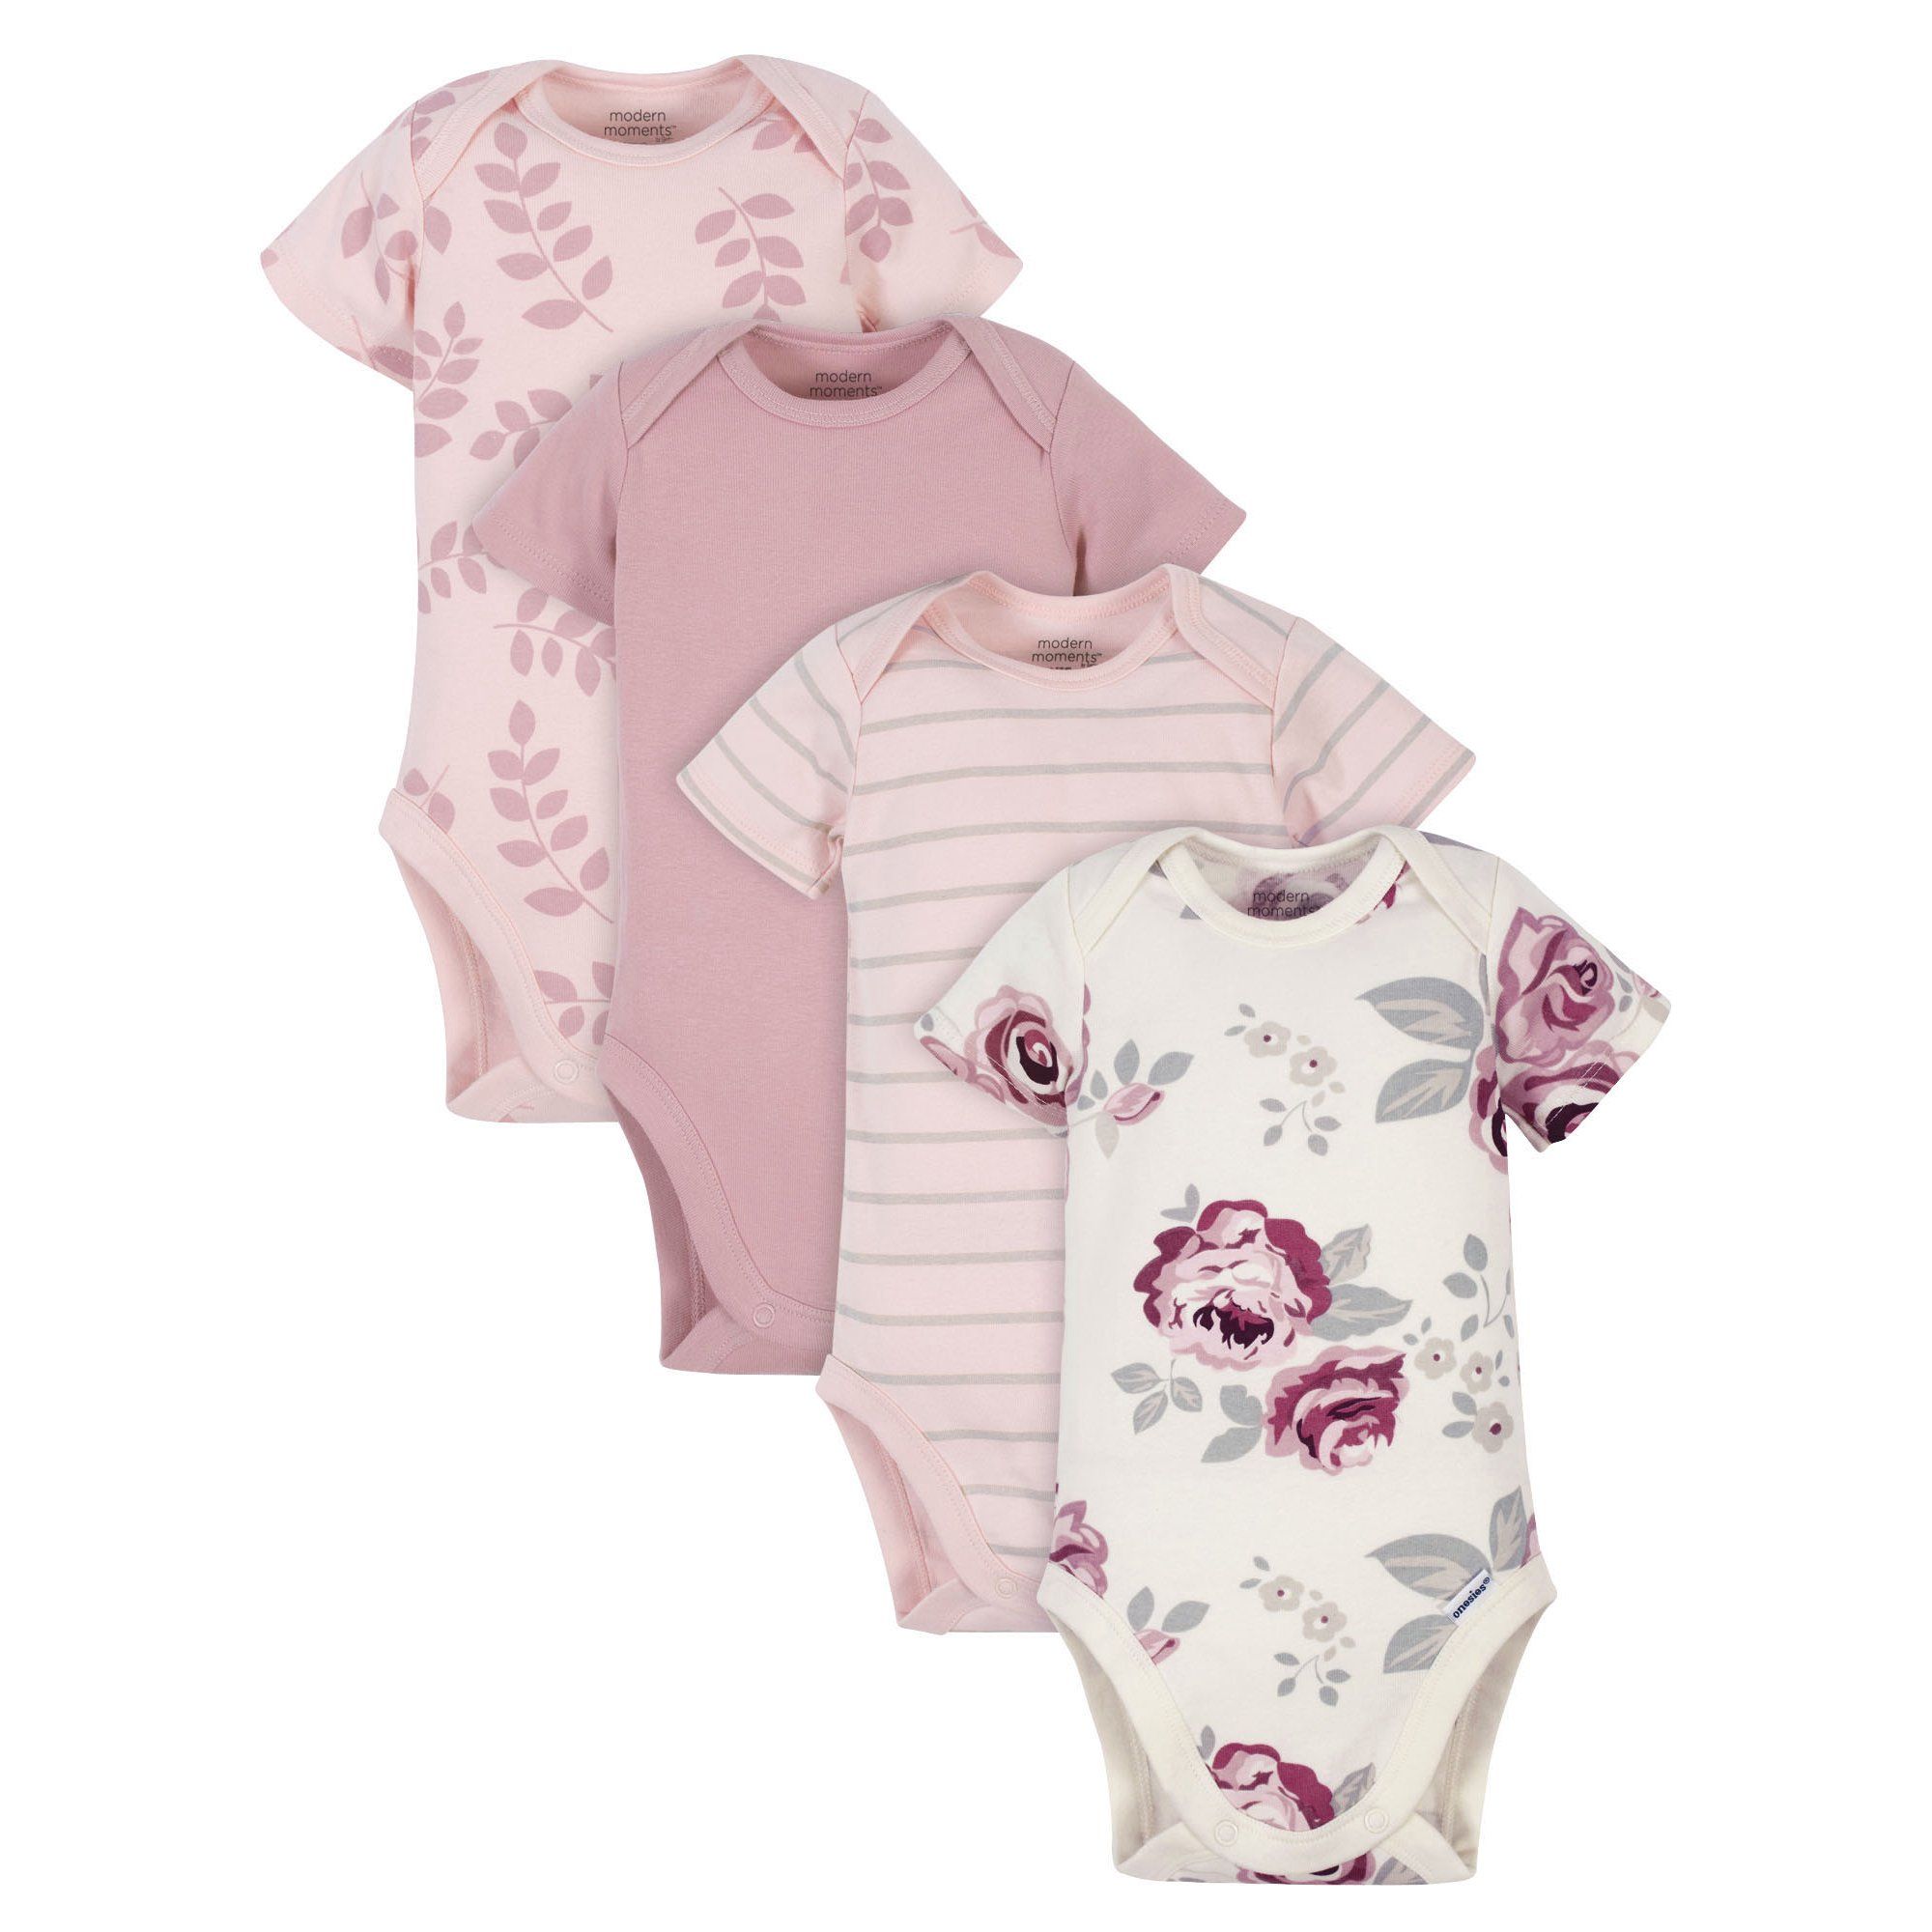 Modern Moments by Gerber Baby Girl Onesies Bodysuits Set, 4-Pack | Walmart (US)